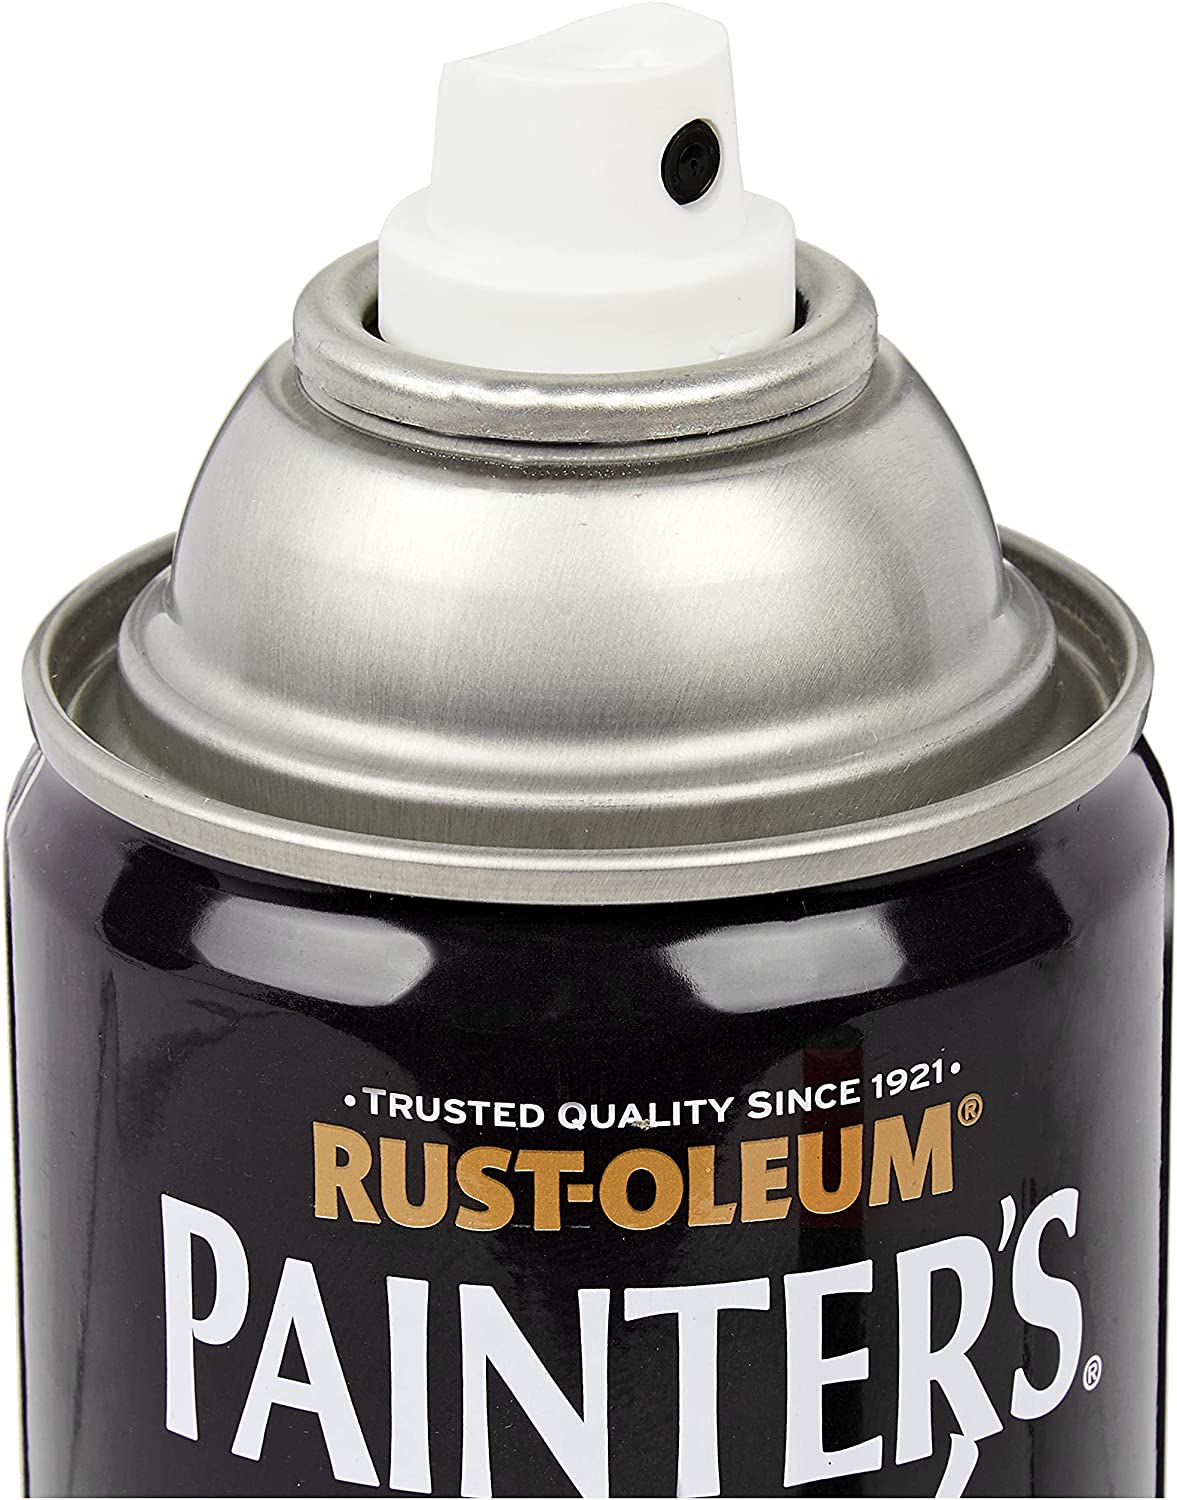 Rust-Oleum 400ml Painter's Touch Spray Paint close up